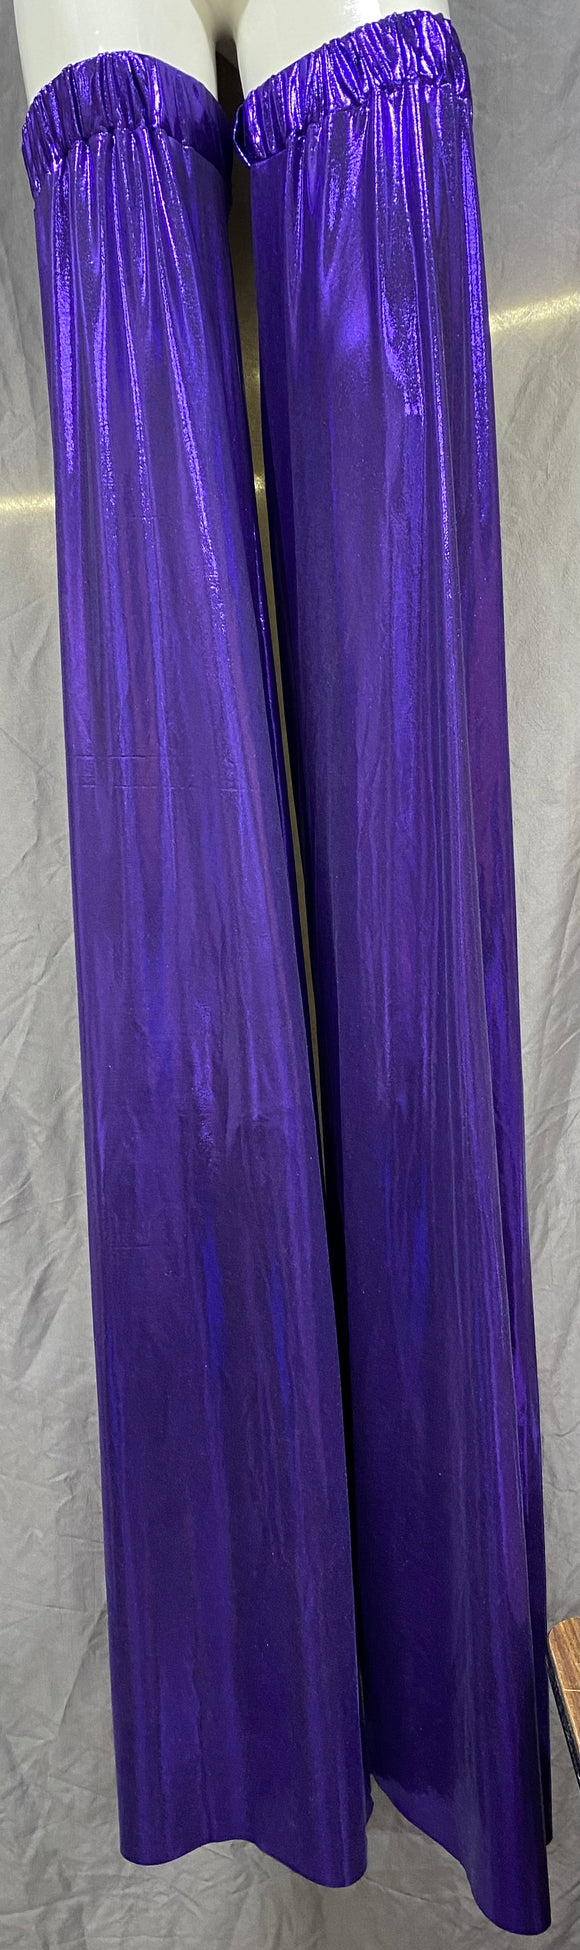 Stilt Covers - Shiny Purple 51